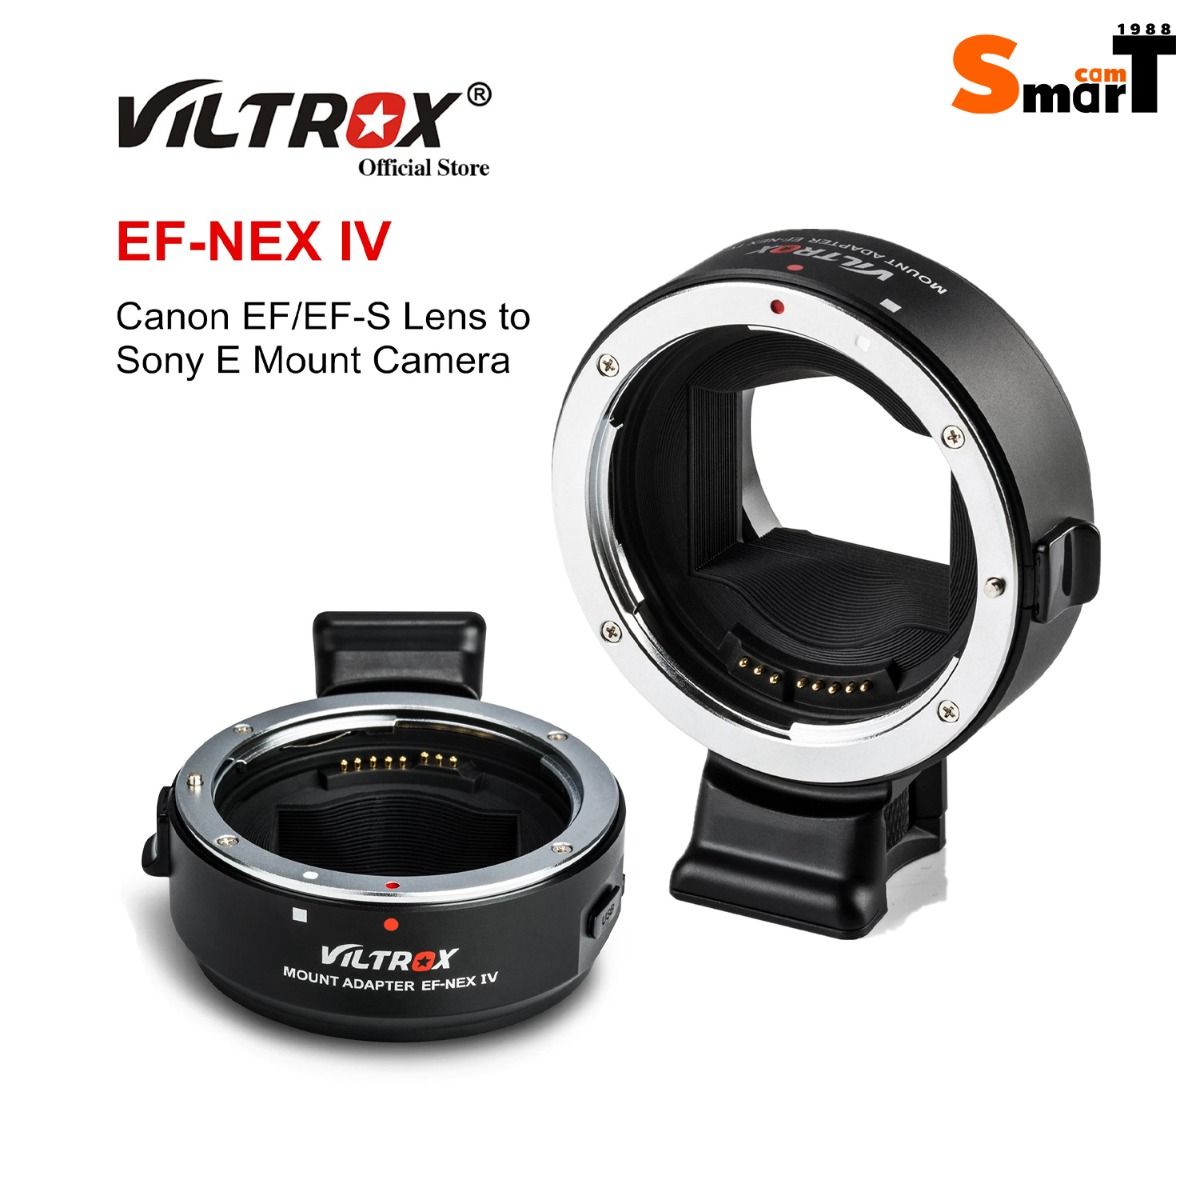 viltrox mount adapter EF-NEX IV